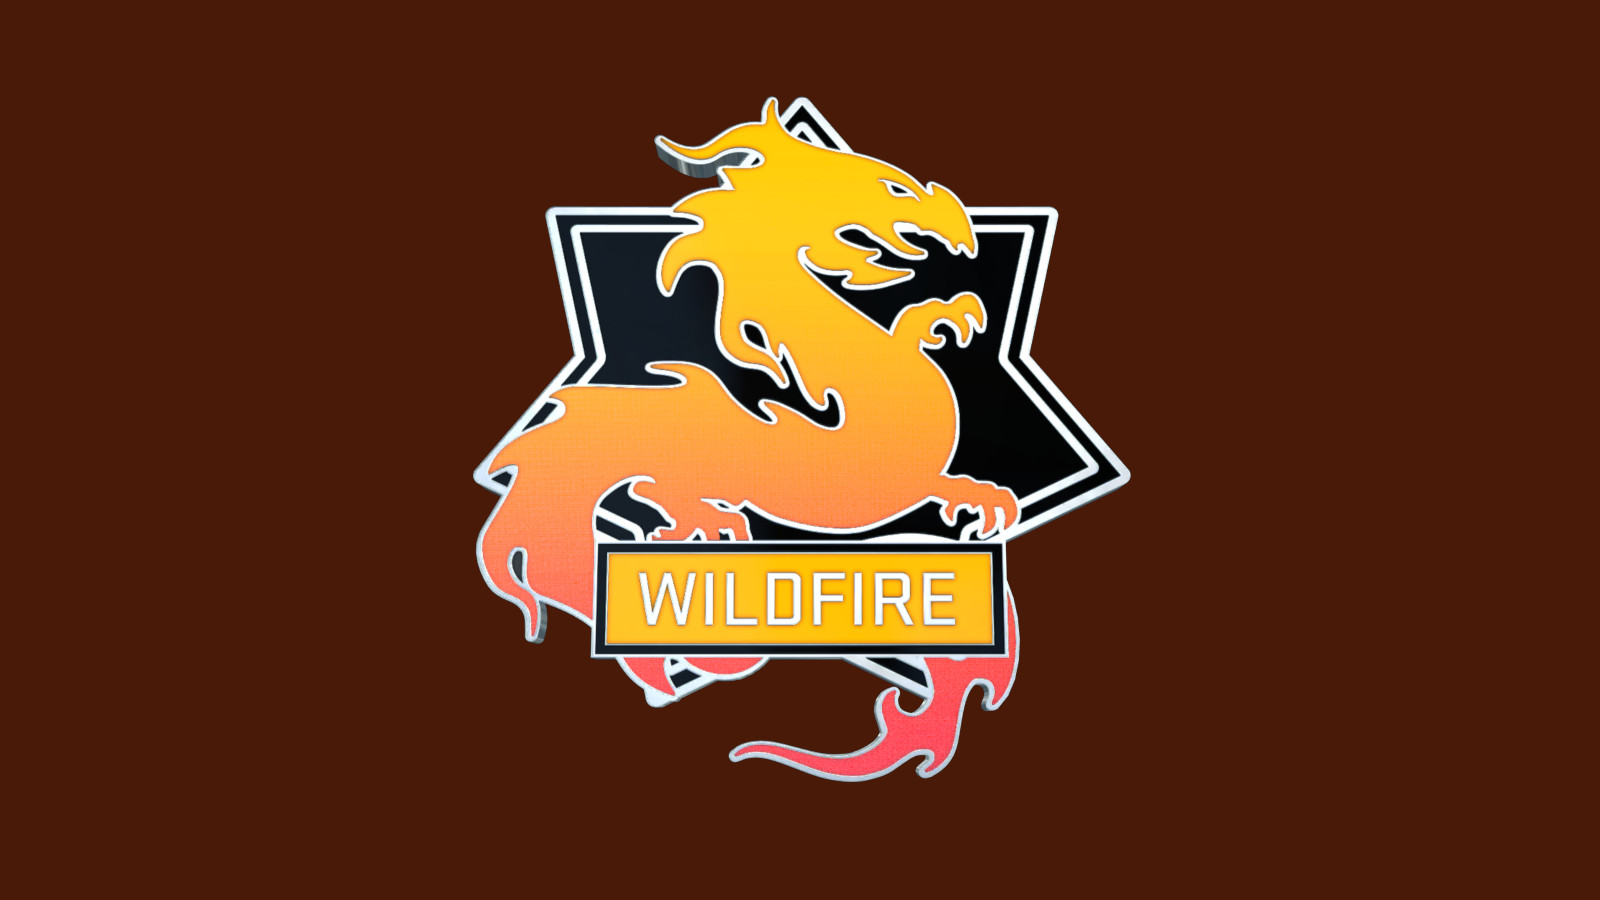 CS:GO - Series 3 - Wildfire Collectible Pin